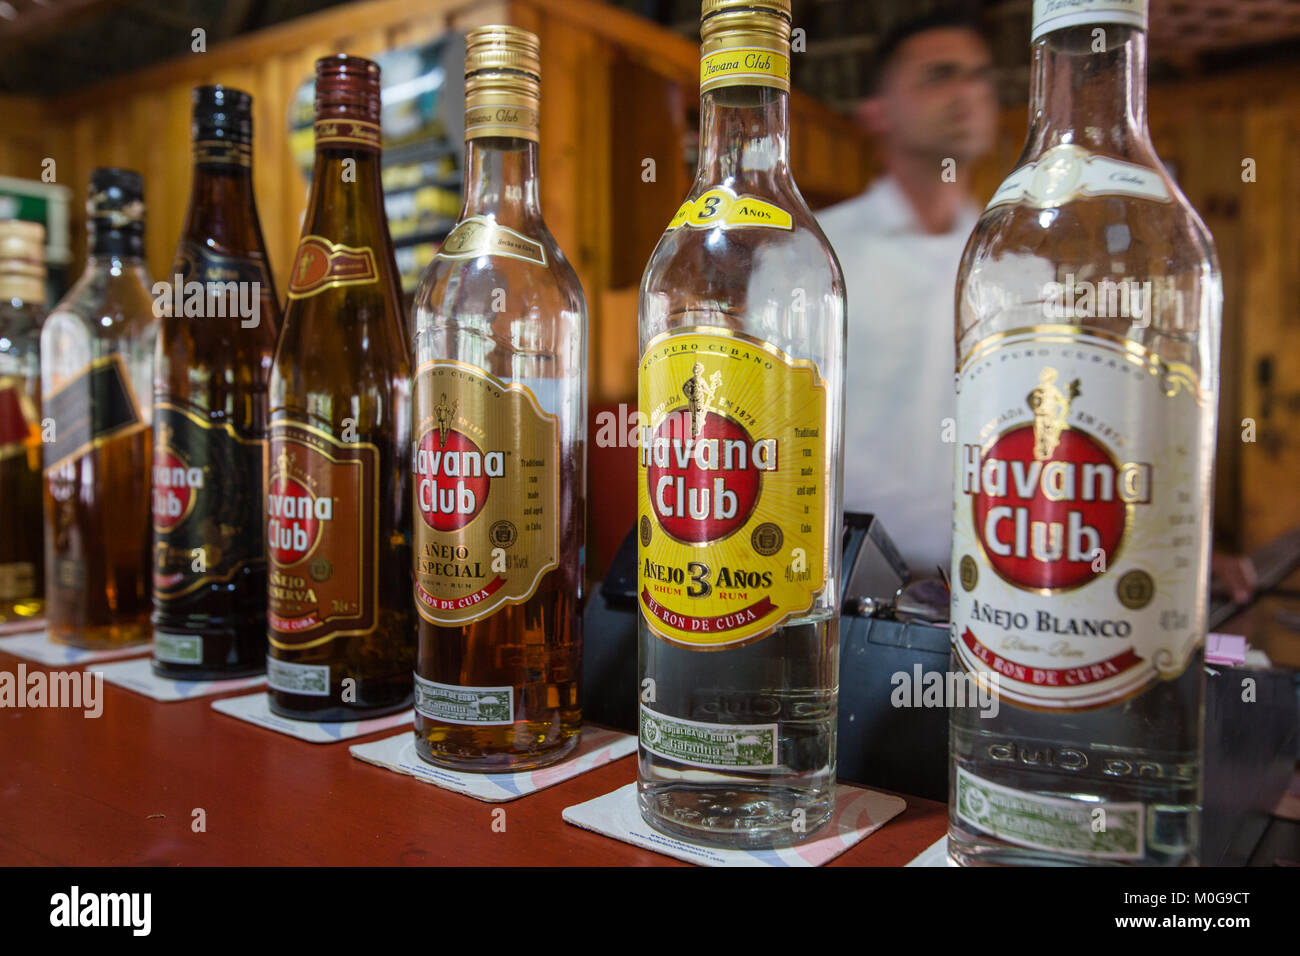 Havana Club rum bottles at Rio Guanayara bar, Cuba Stock Photo - Alamy